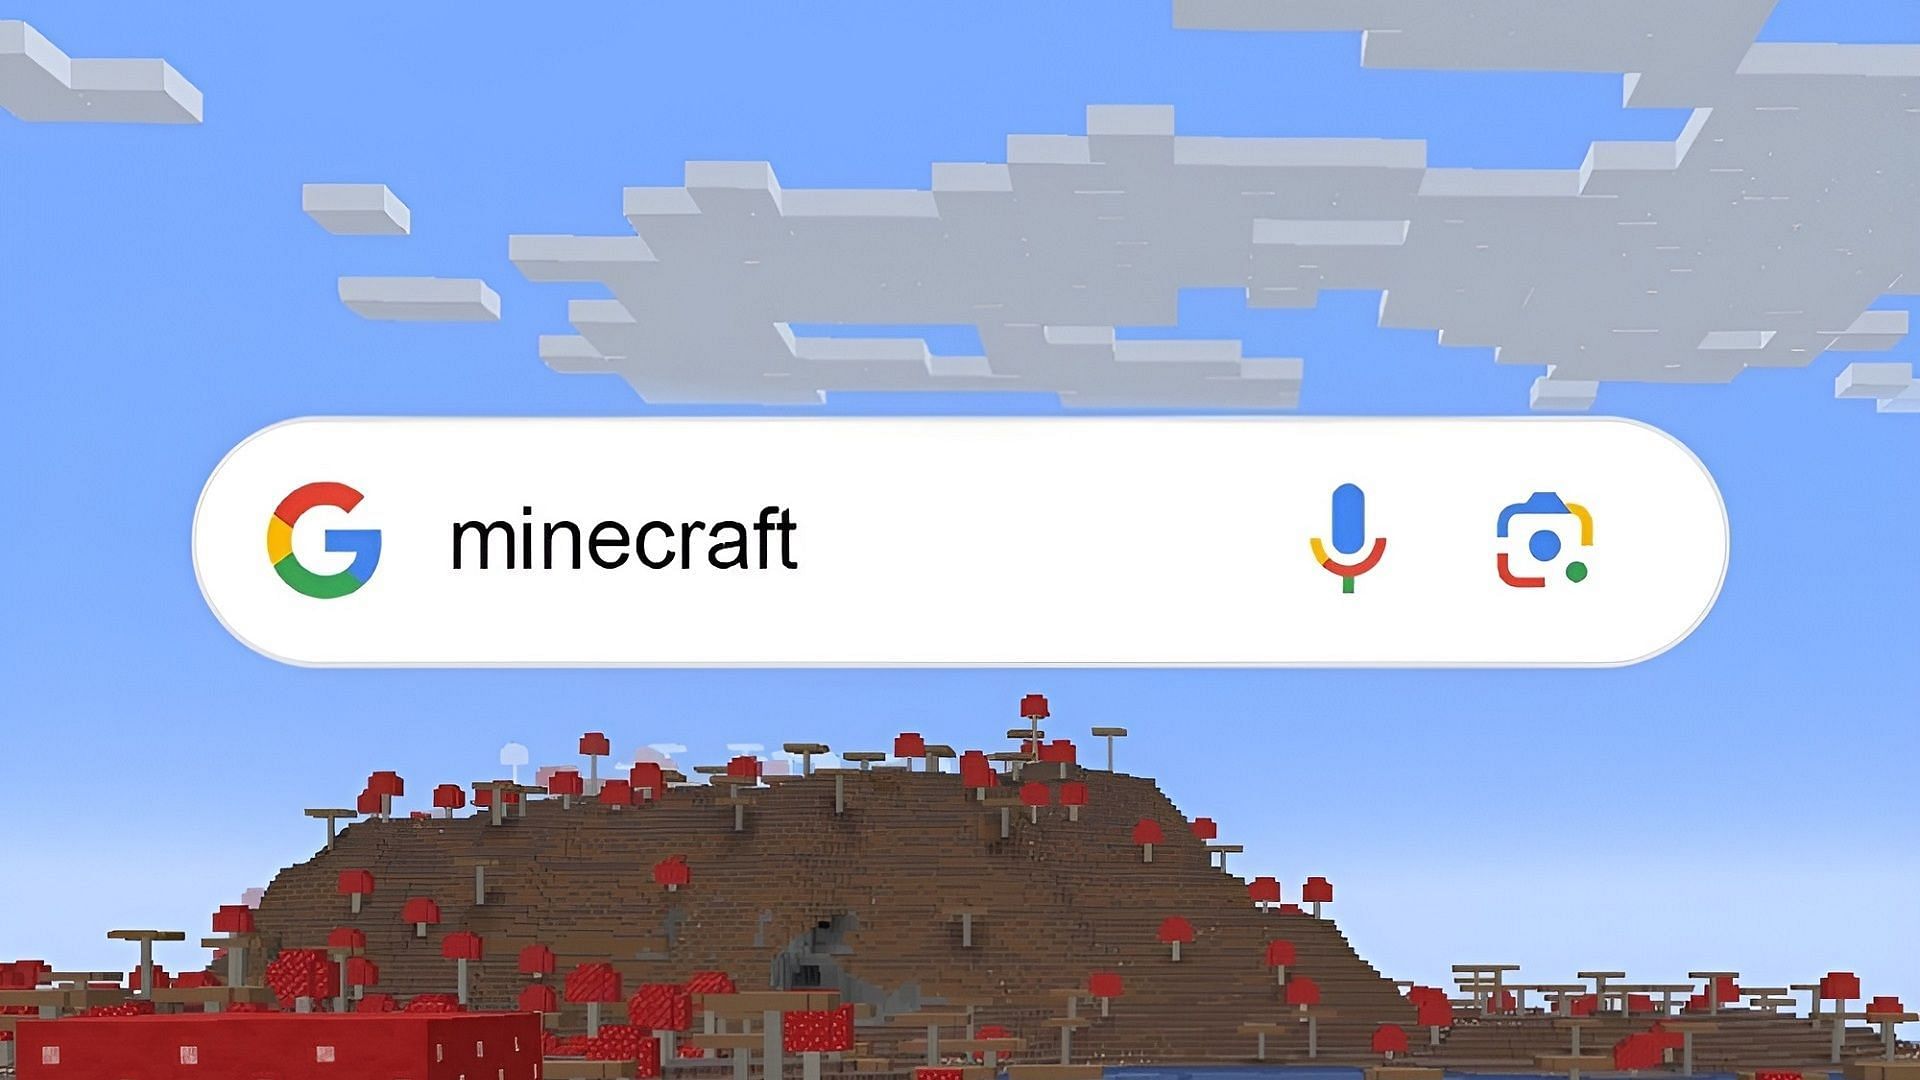 Google reveals cute Minecraft mini-game to celebrate 15th anniversary